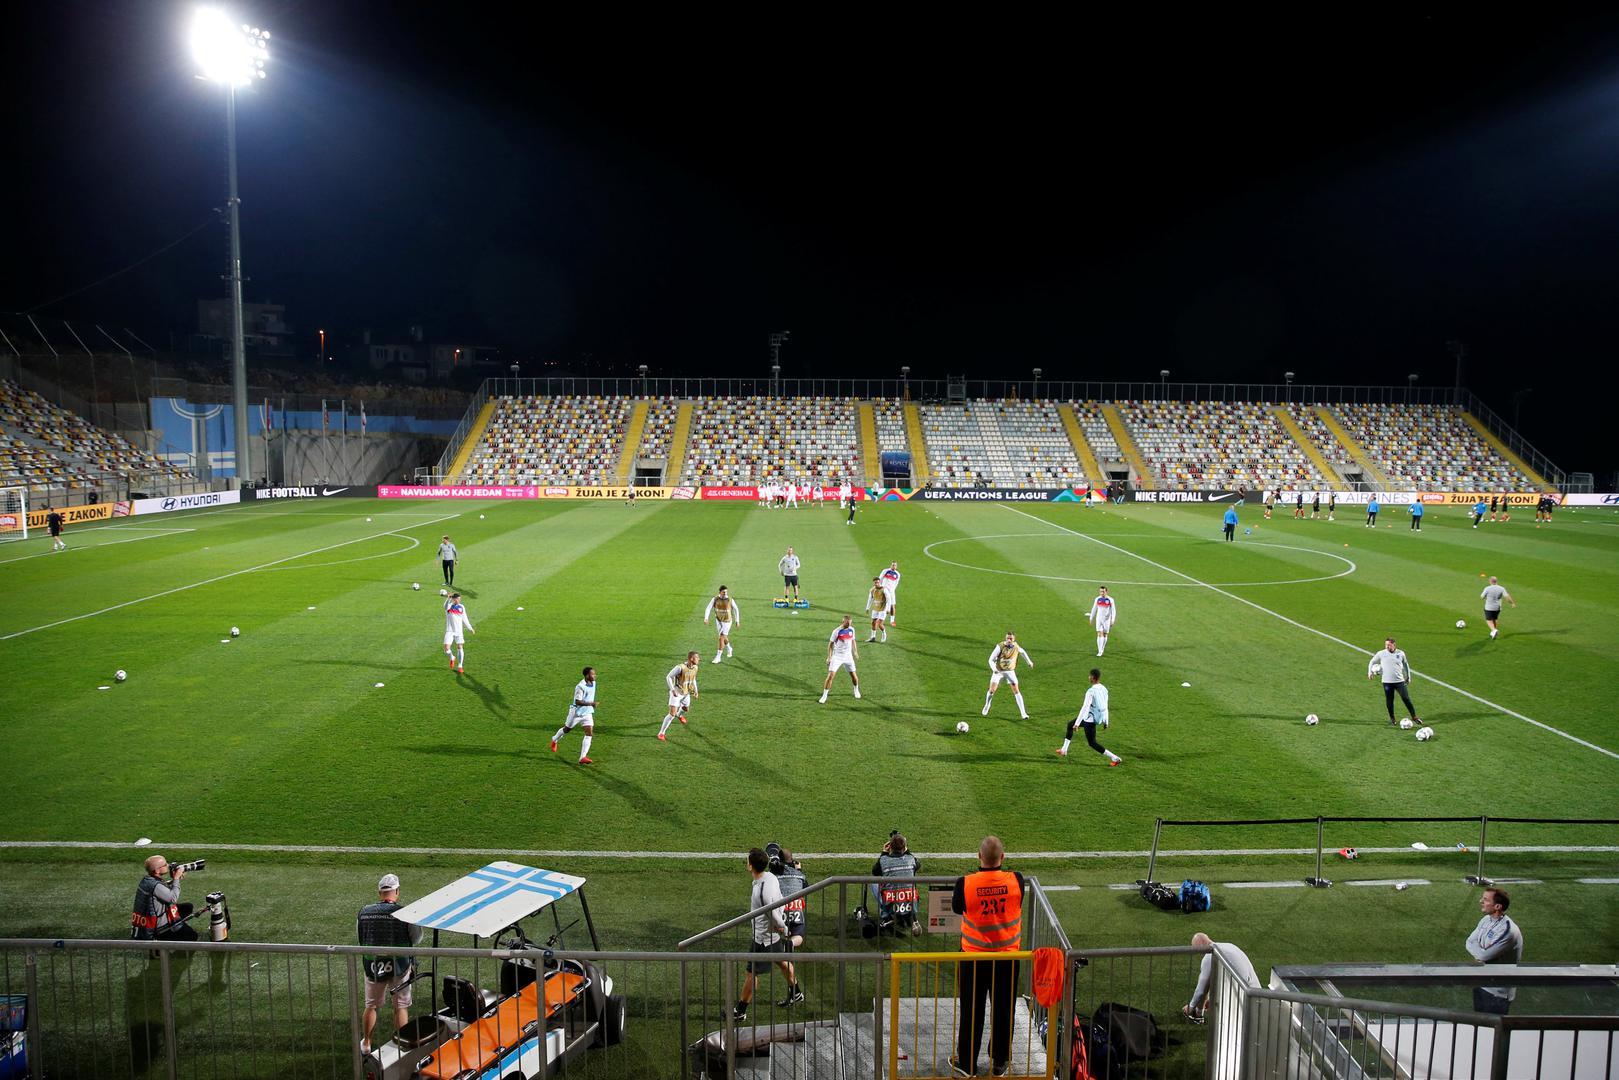 Zbog svastike na Poljudu 2015. utakmica se igrala pred praznim tribinama.

